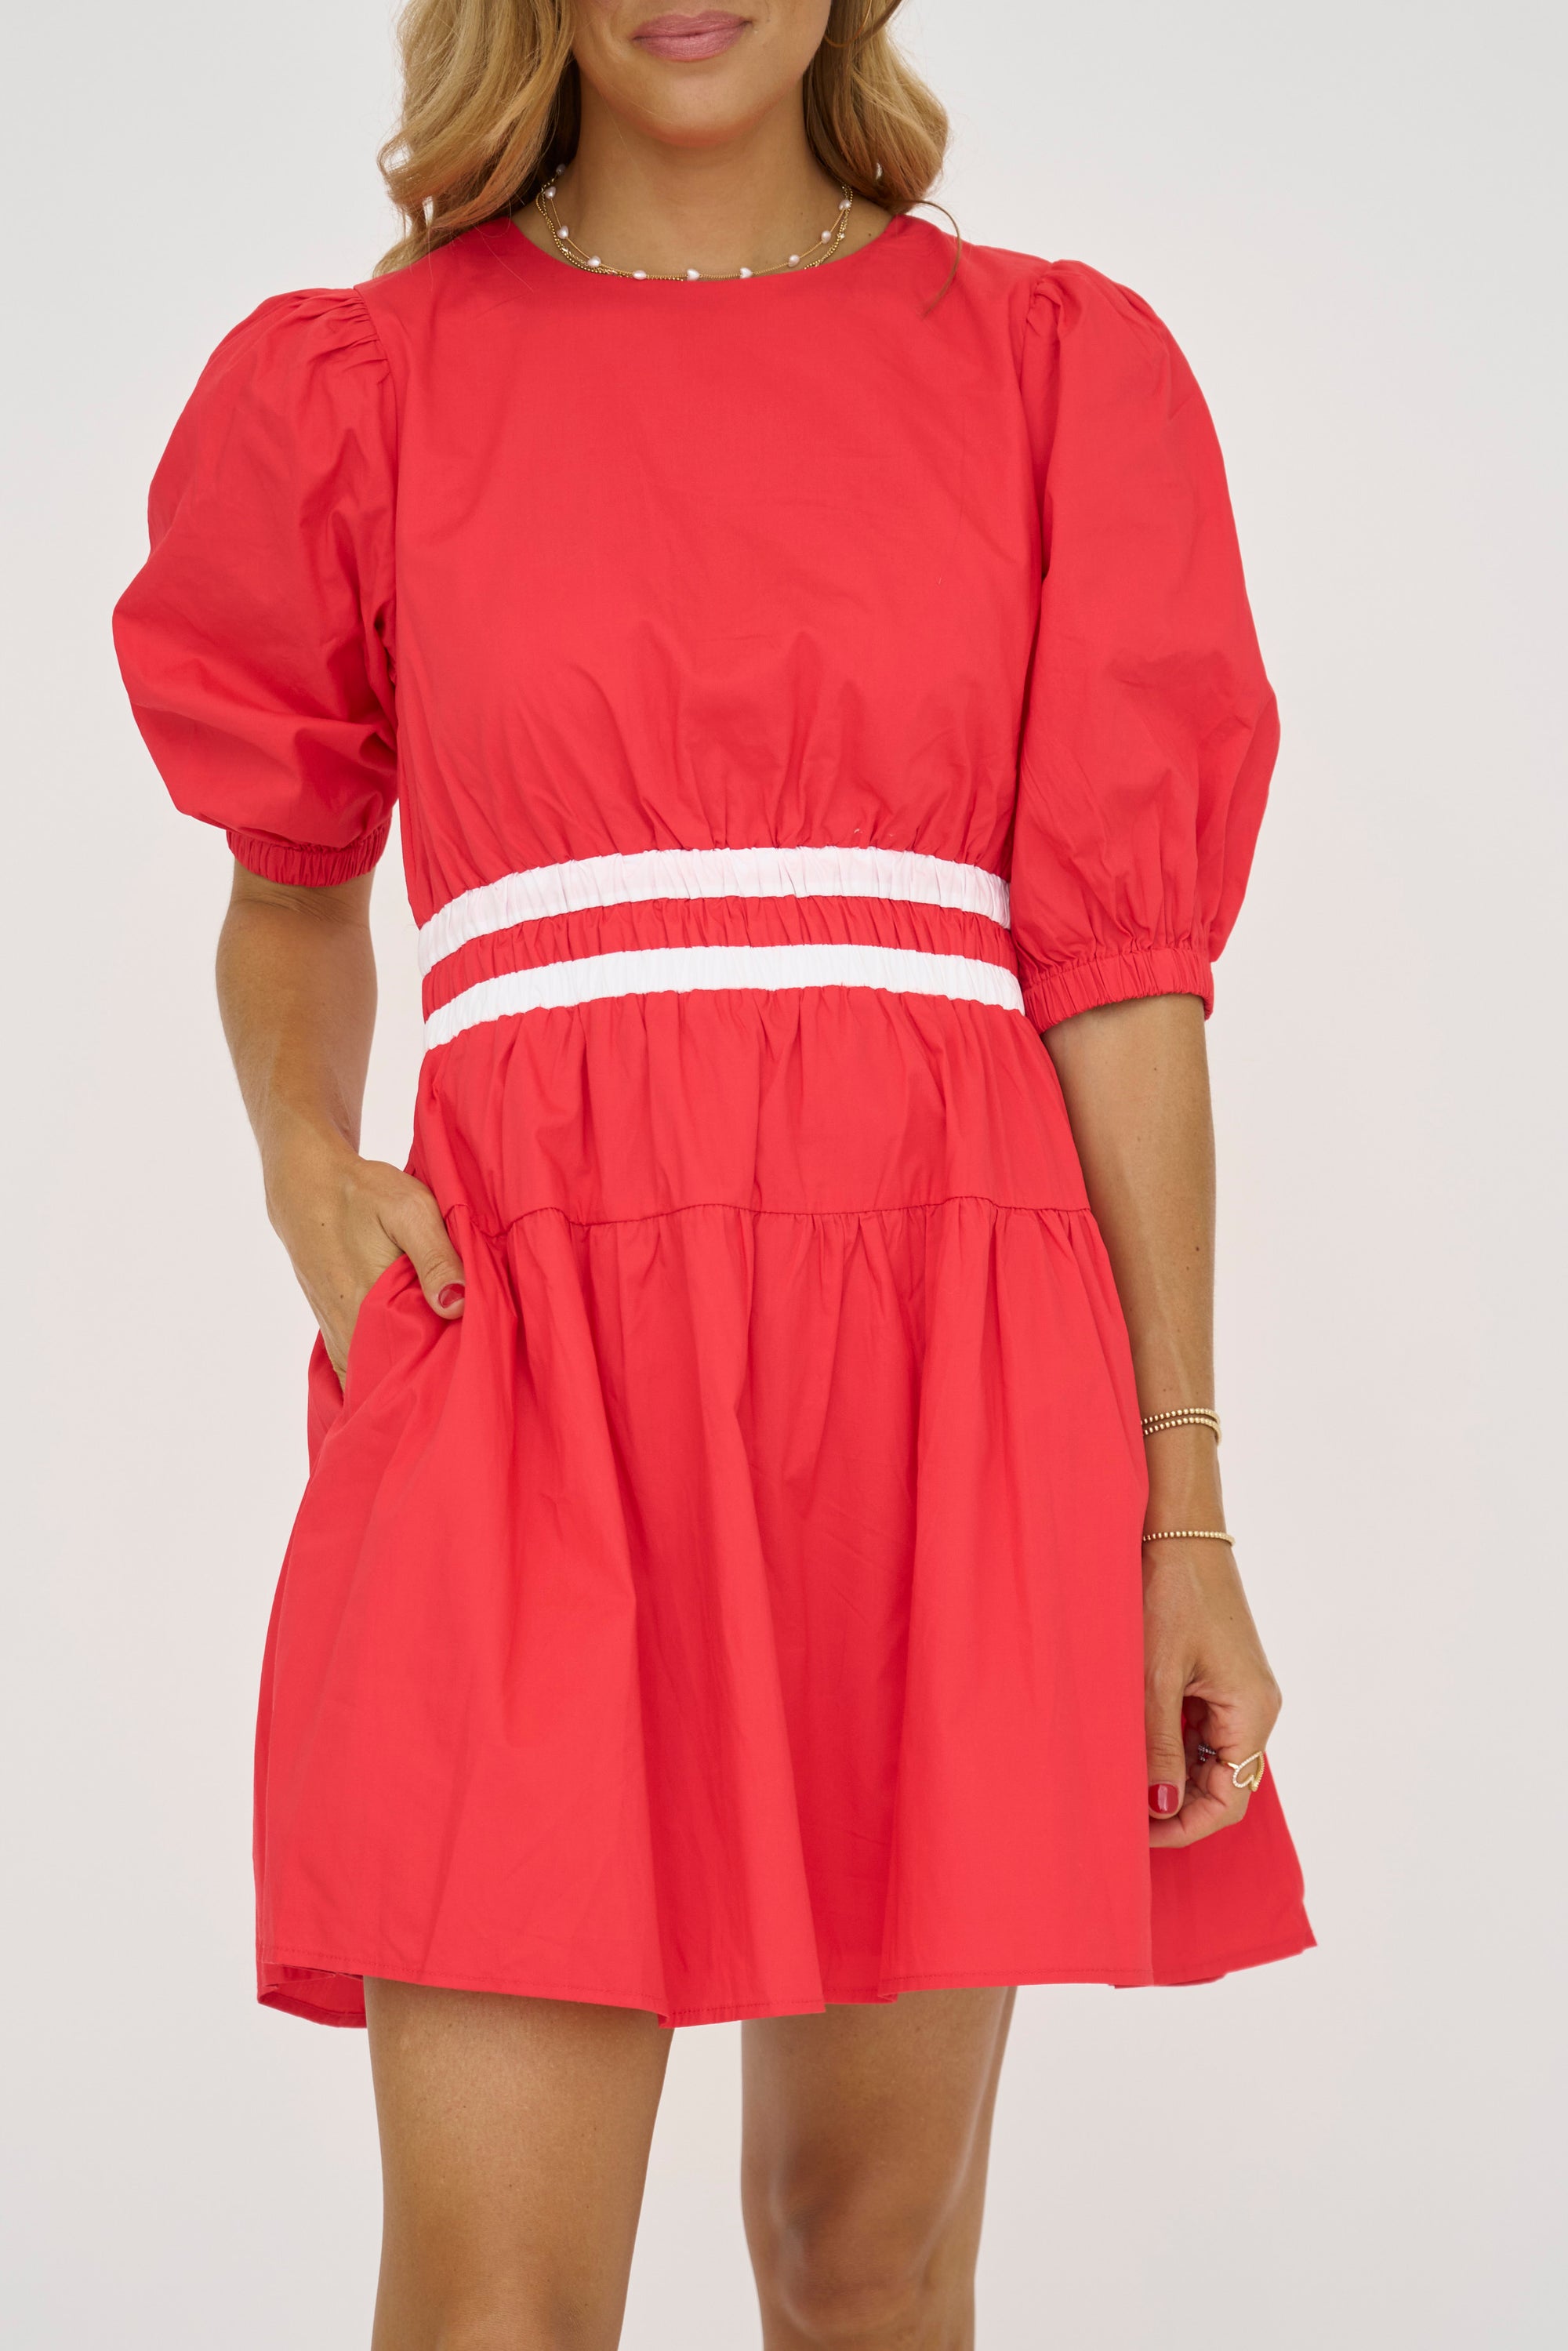 Red/White Colorblock Mini Dress